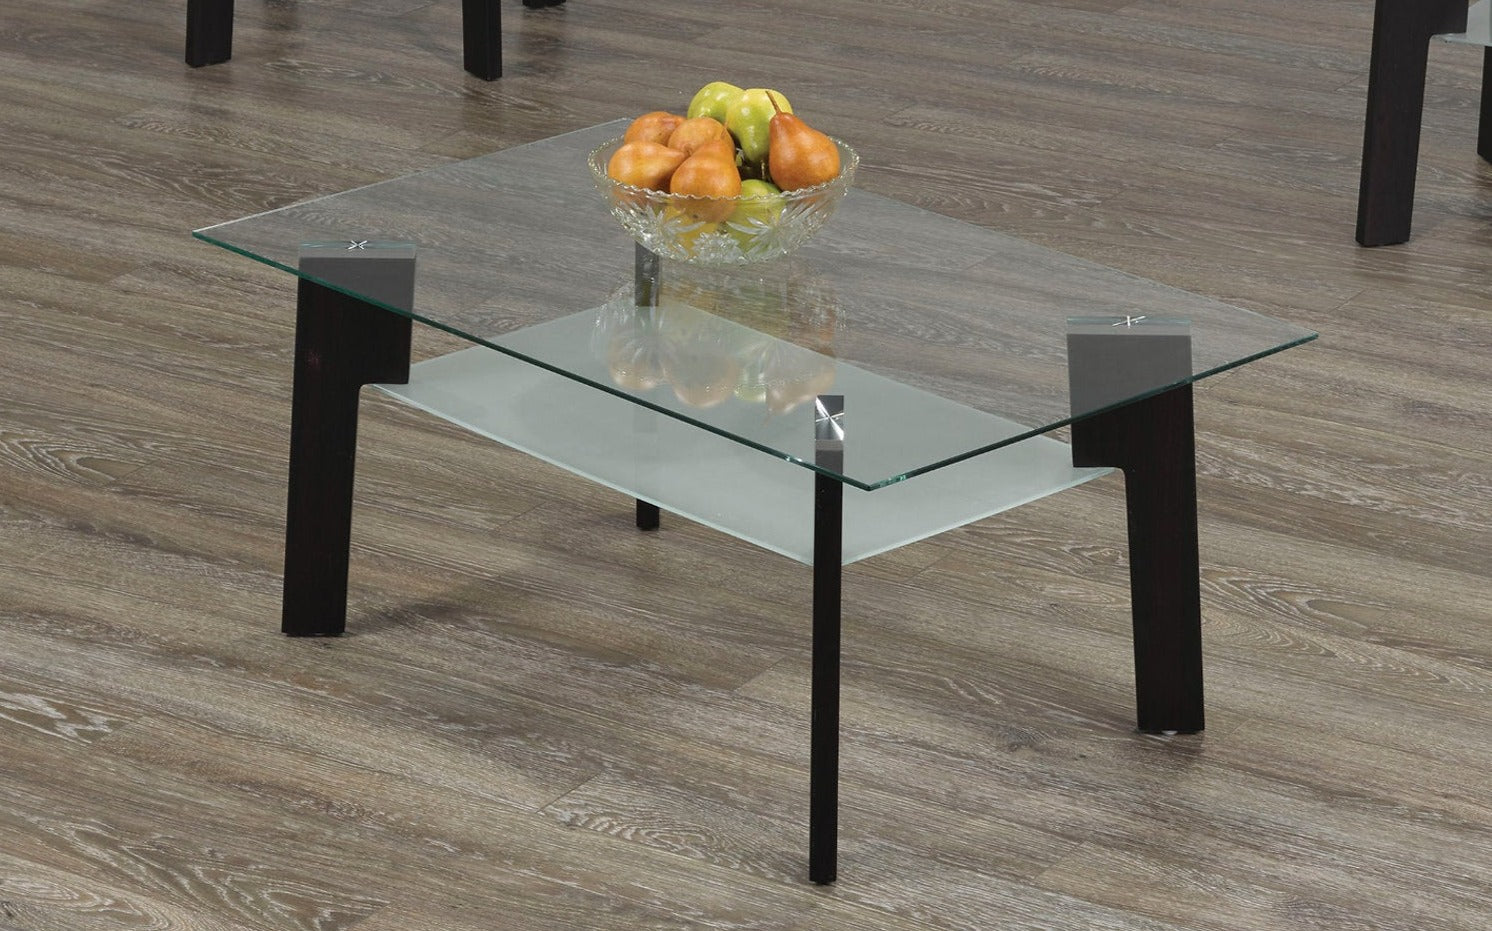 3 Pc  Coffee Table Set  - Black legs & Glass Top  IF-2082